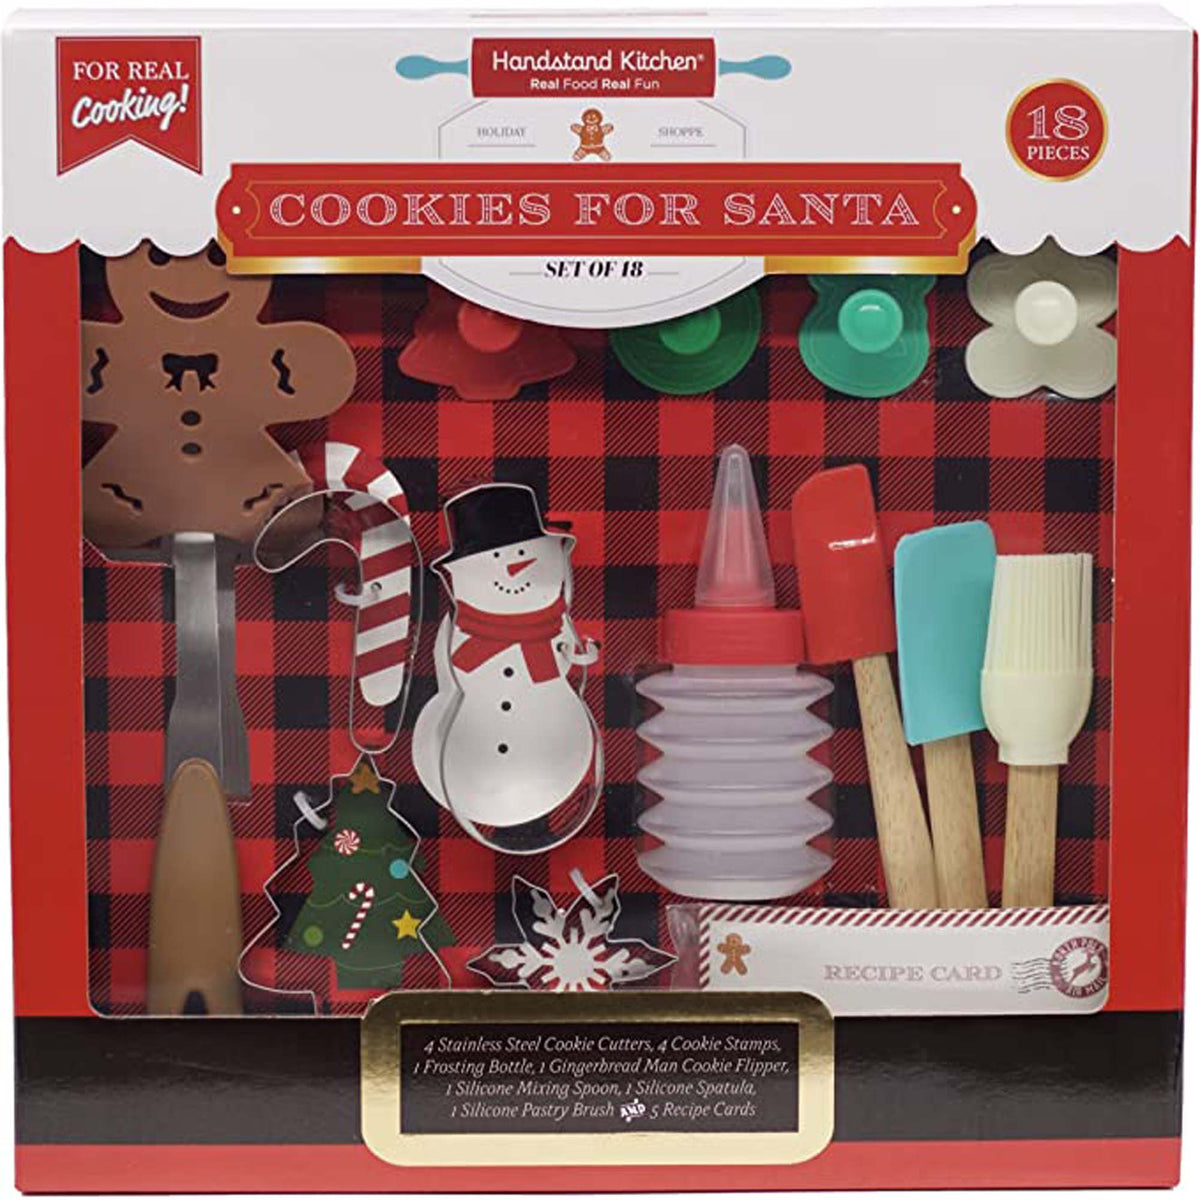 Handstand Kitchen Christmas Baking Set, Cookies for Santa, 1 Count